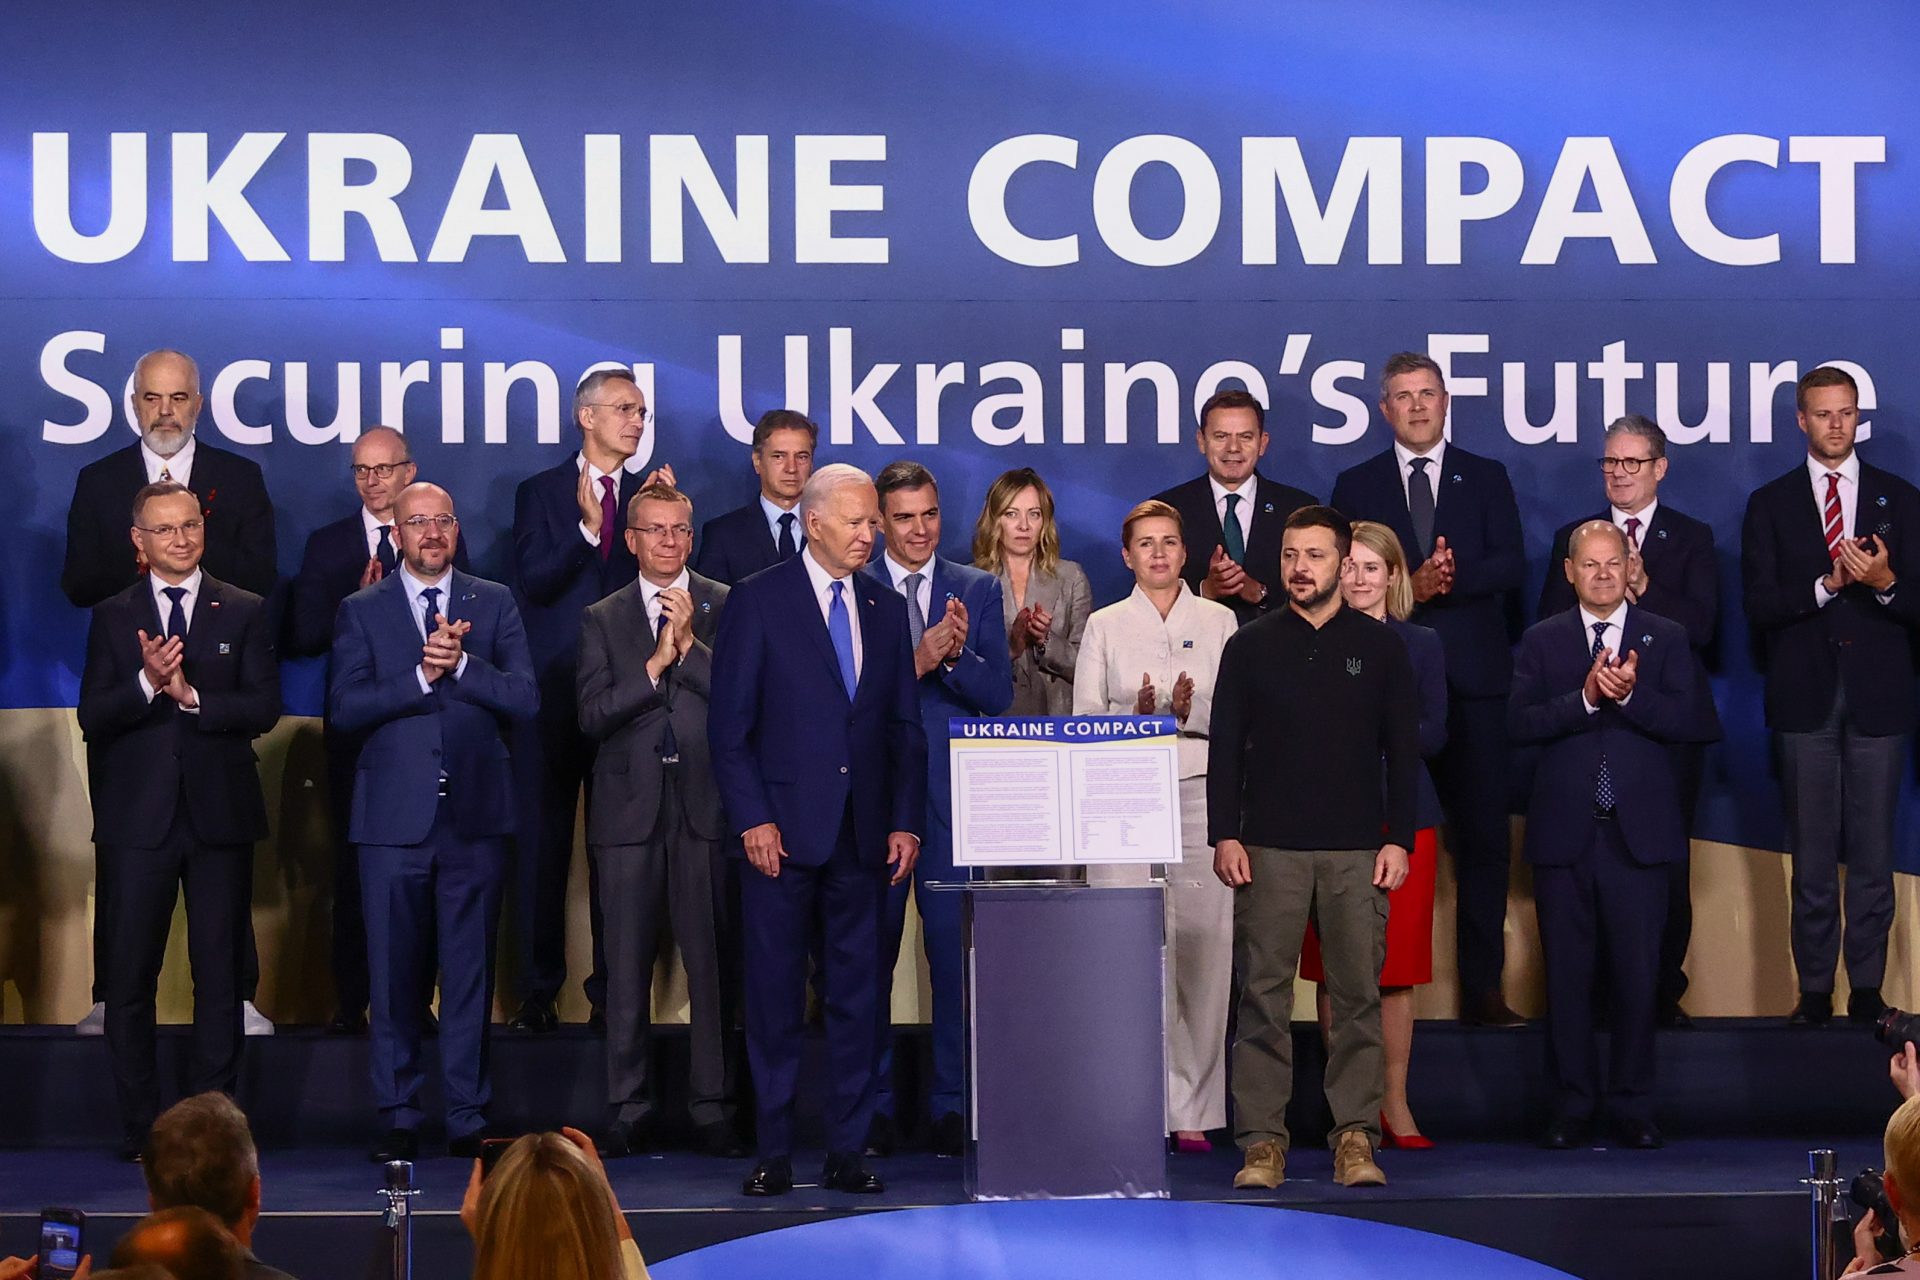 Trudeau signed onto the Ukraine Compact